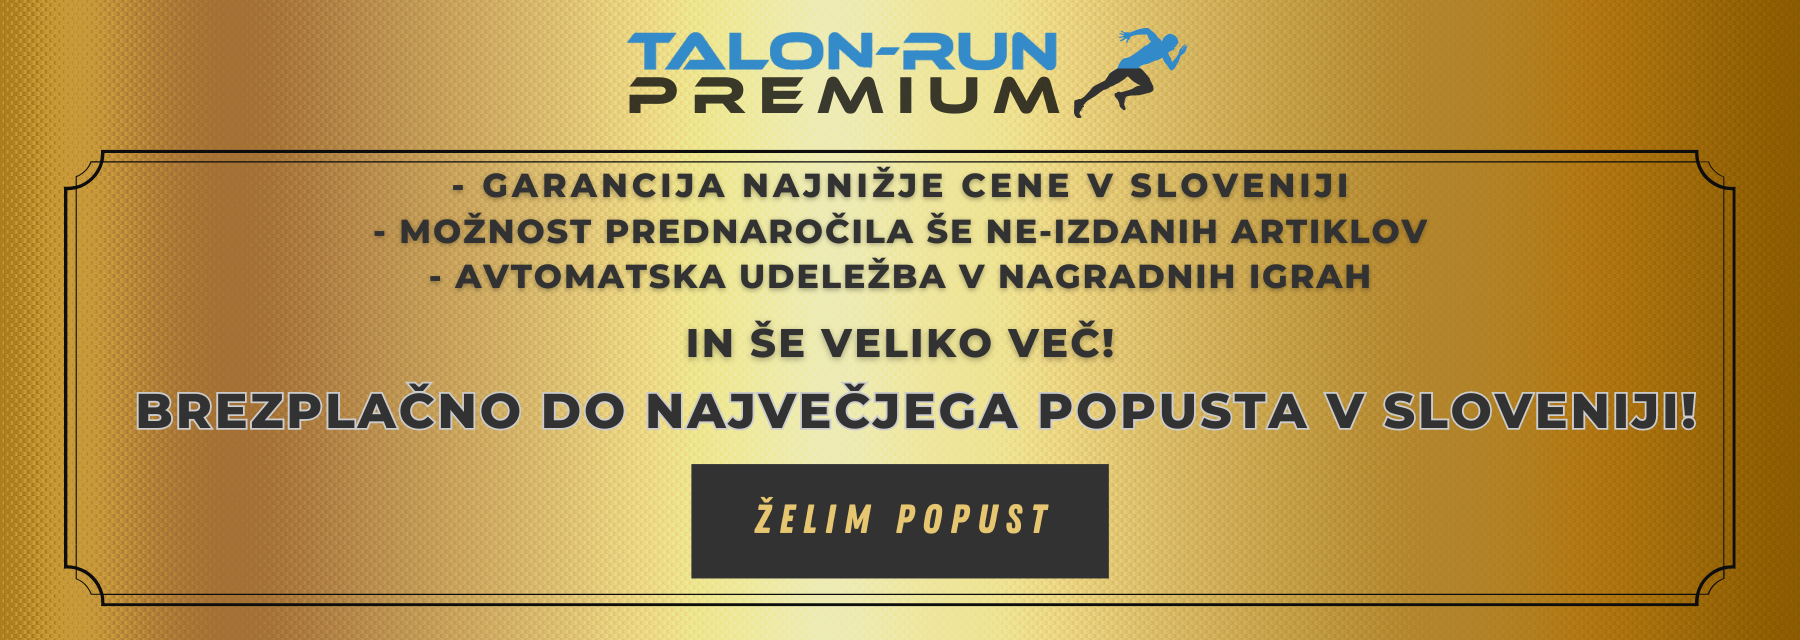 Talon-Run Premium